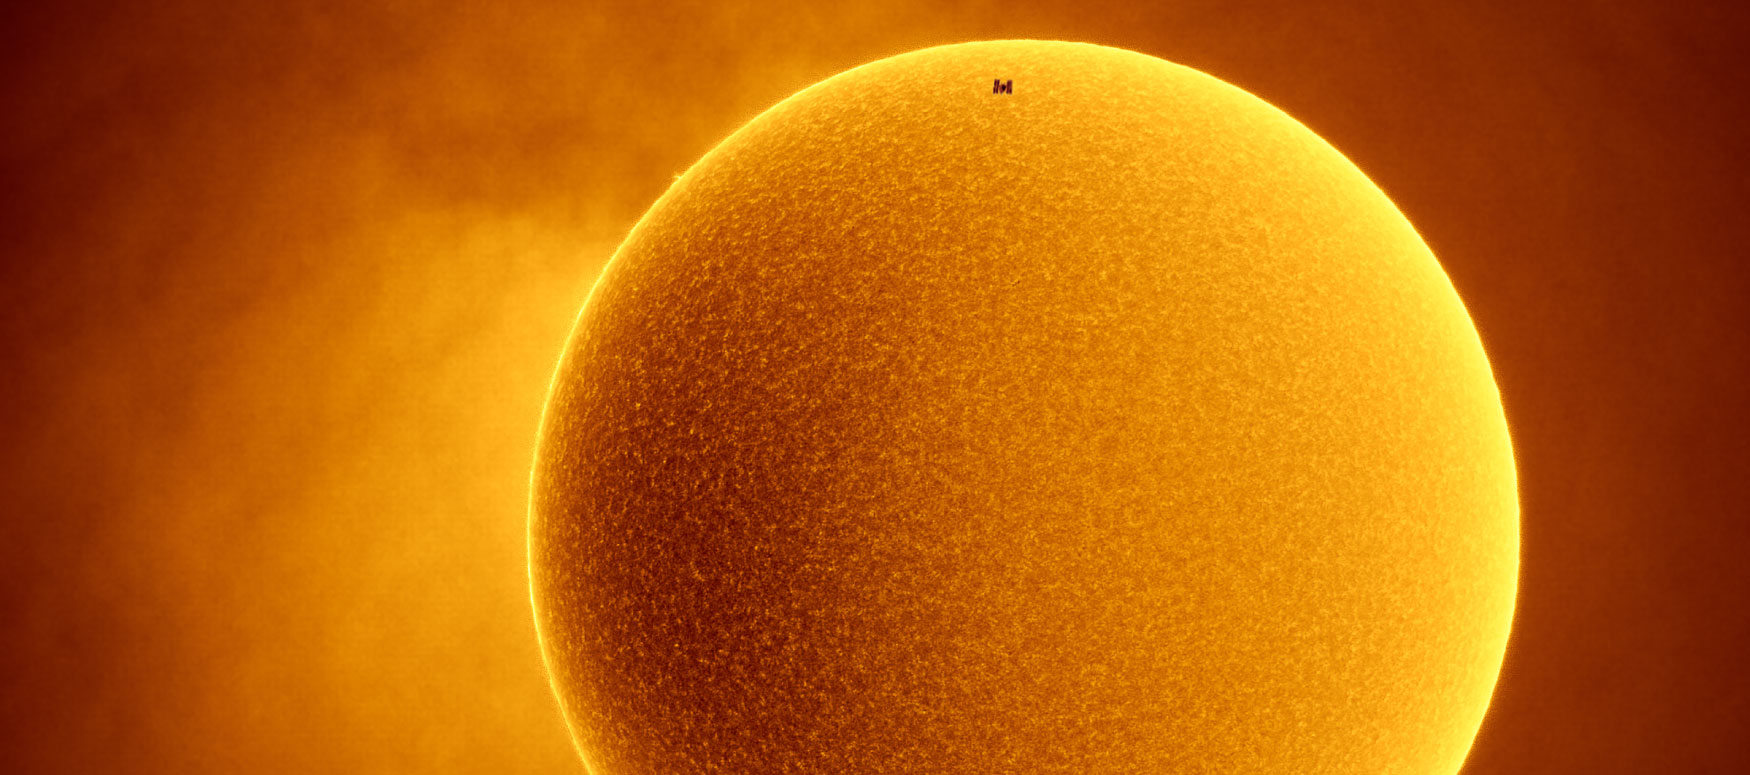 Picture of the sun taken by Rainee Colarcurcio in 2019 during a solar minimum.